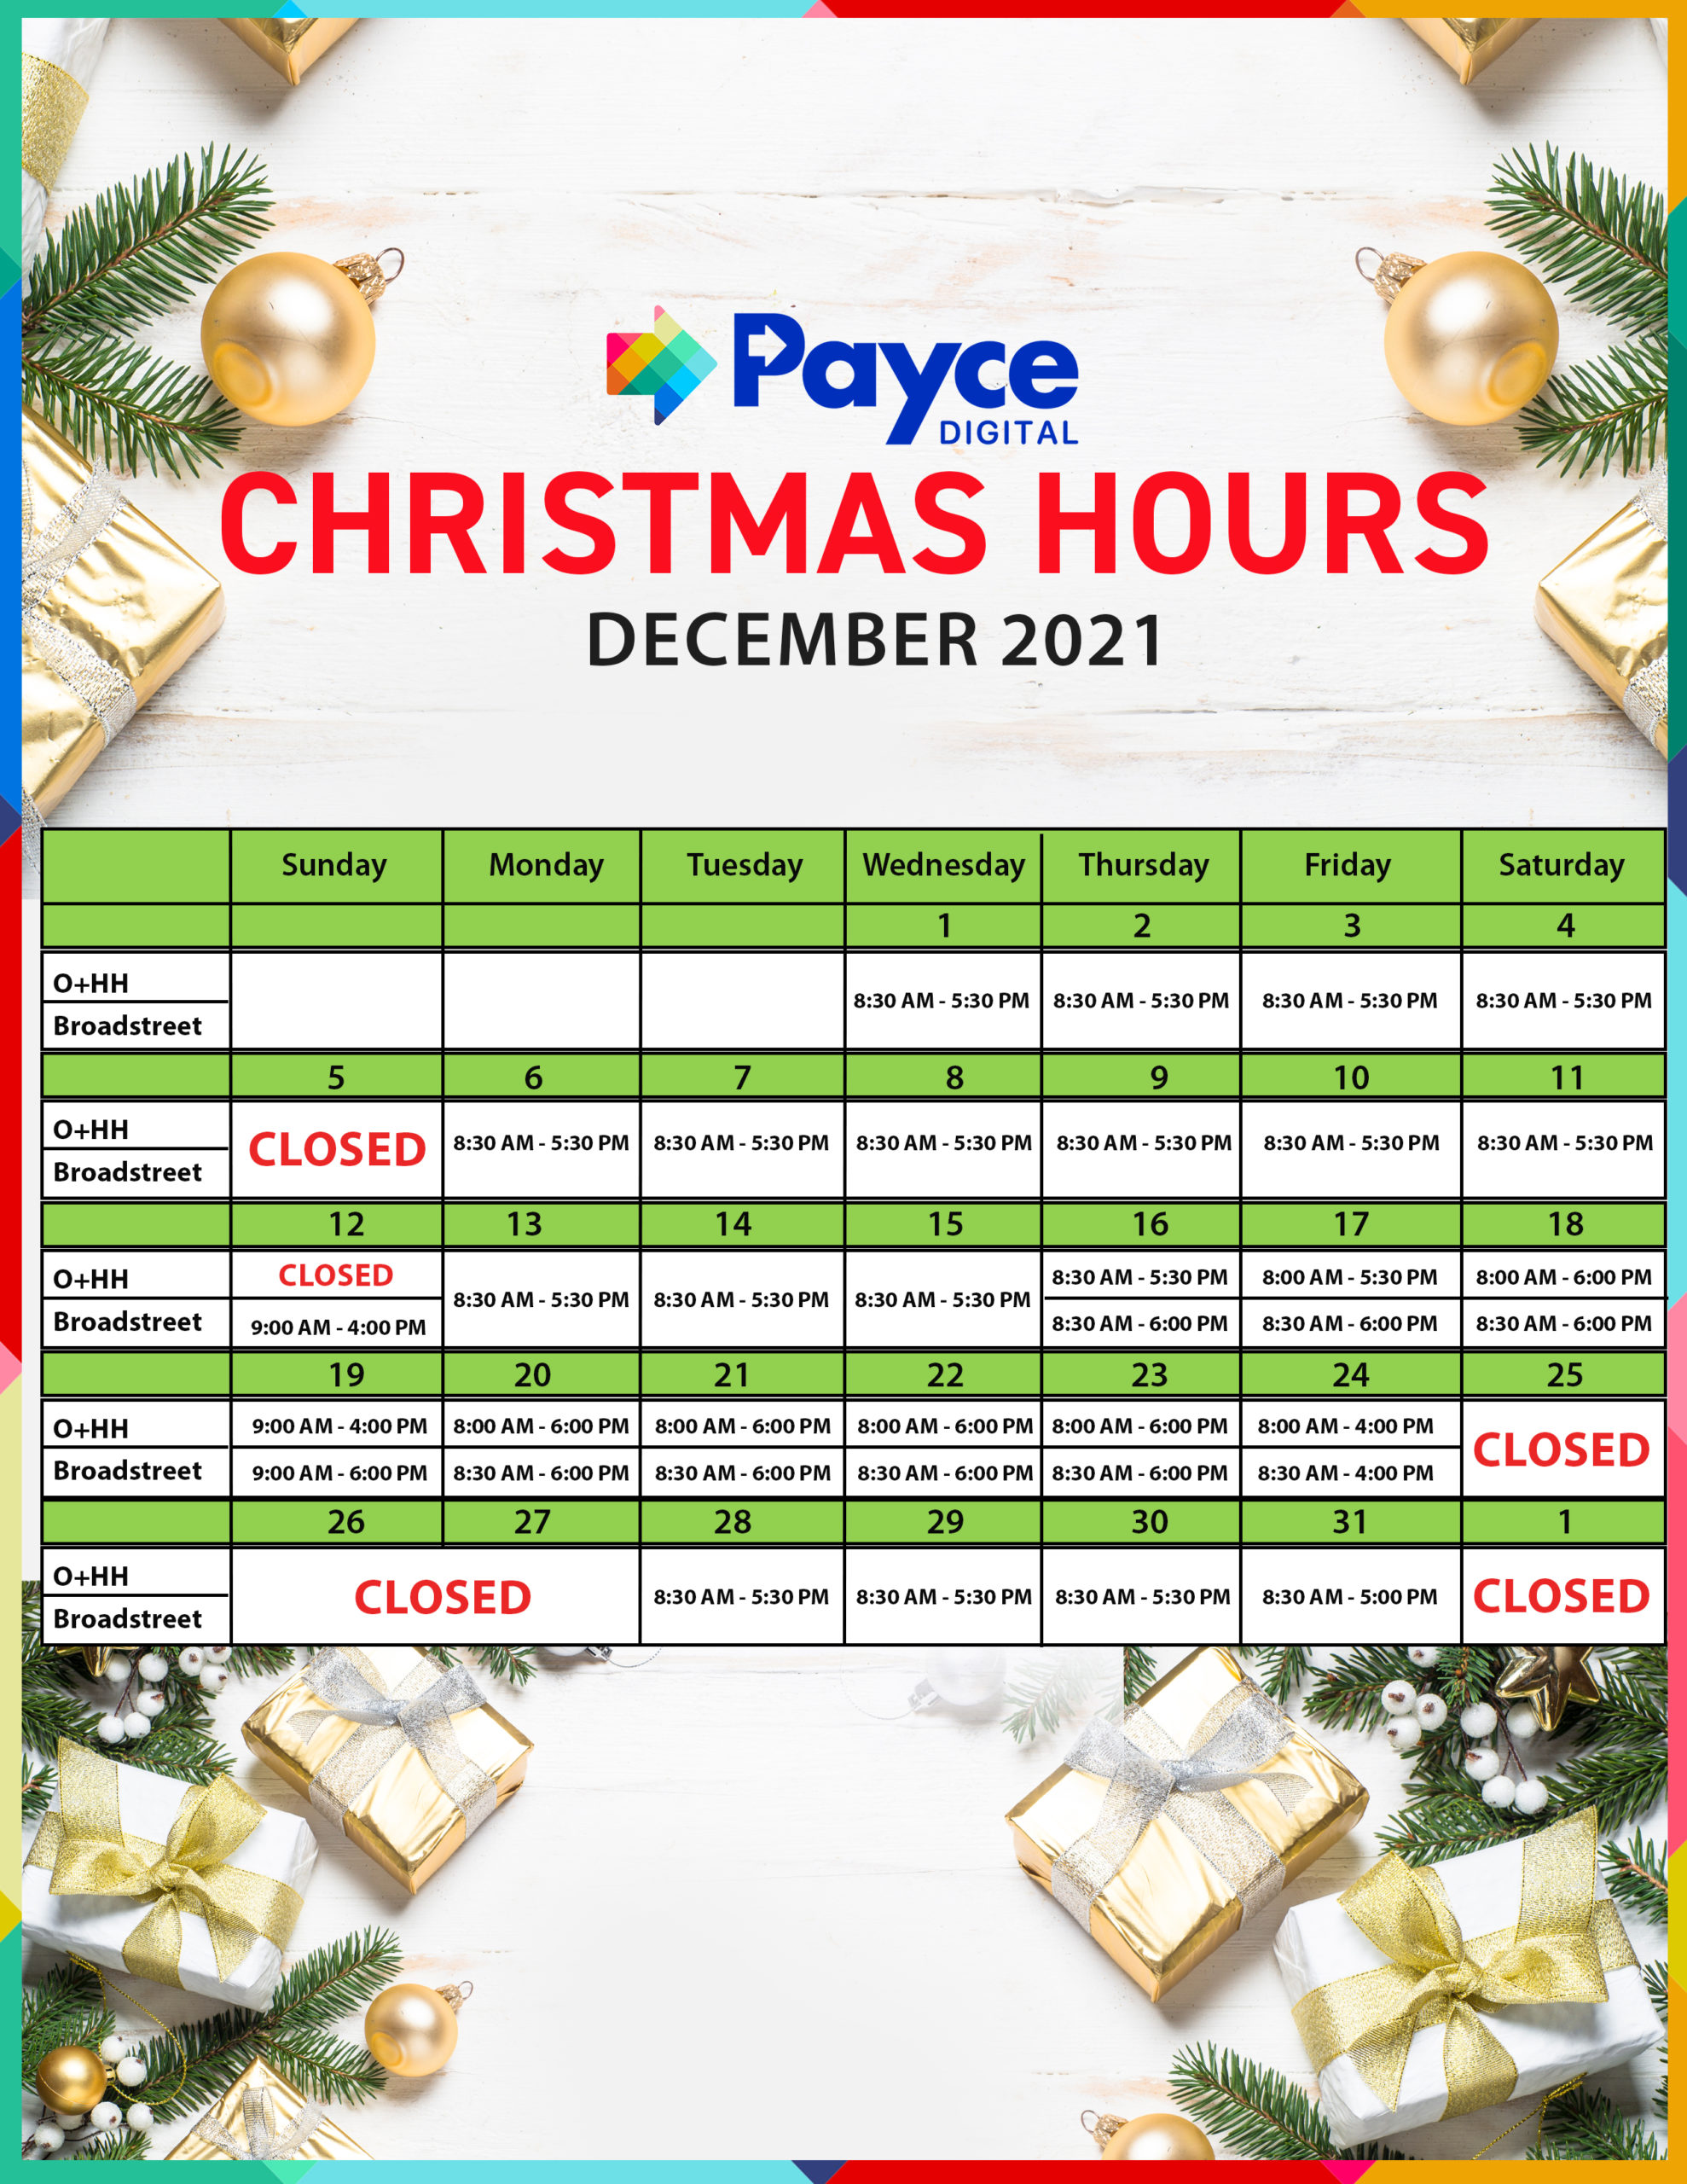 Payce Digital Christmas Hours 2021